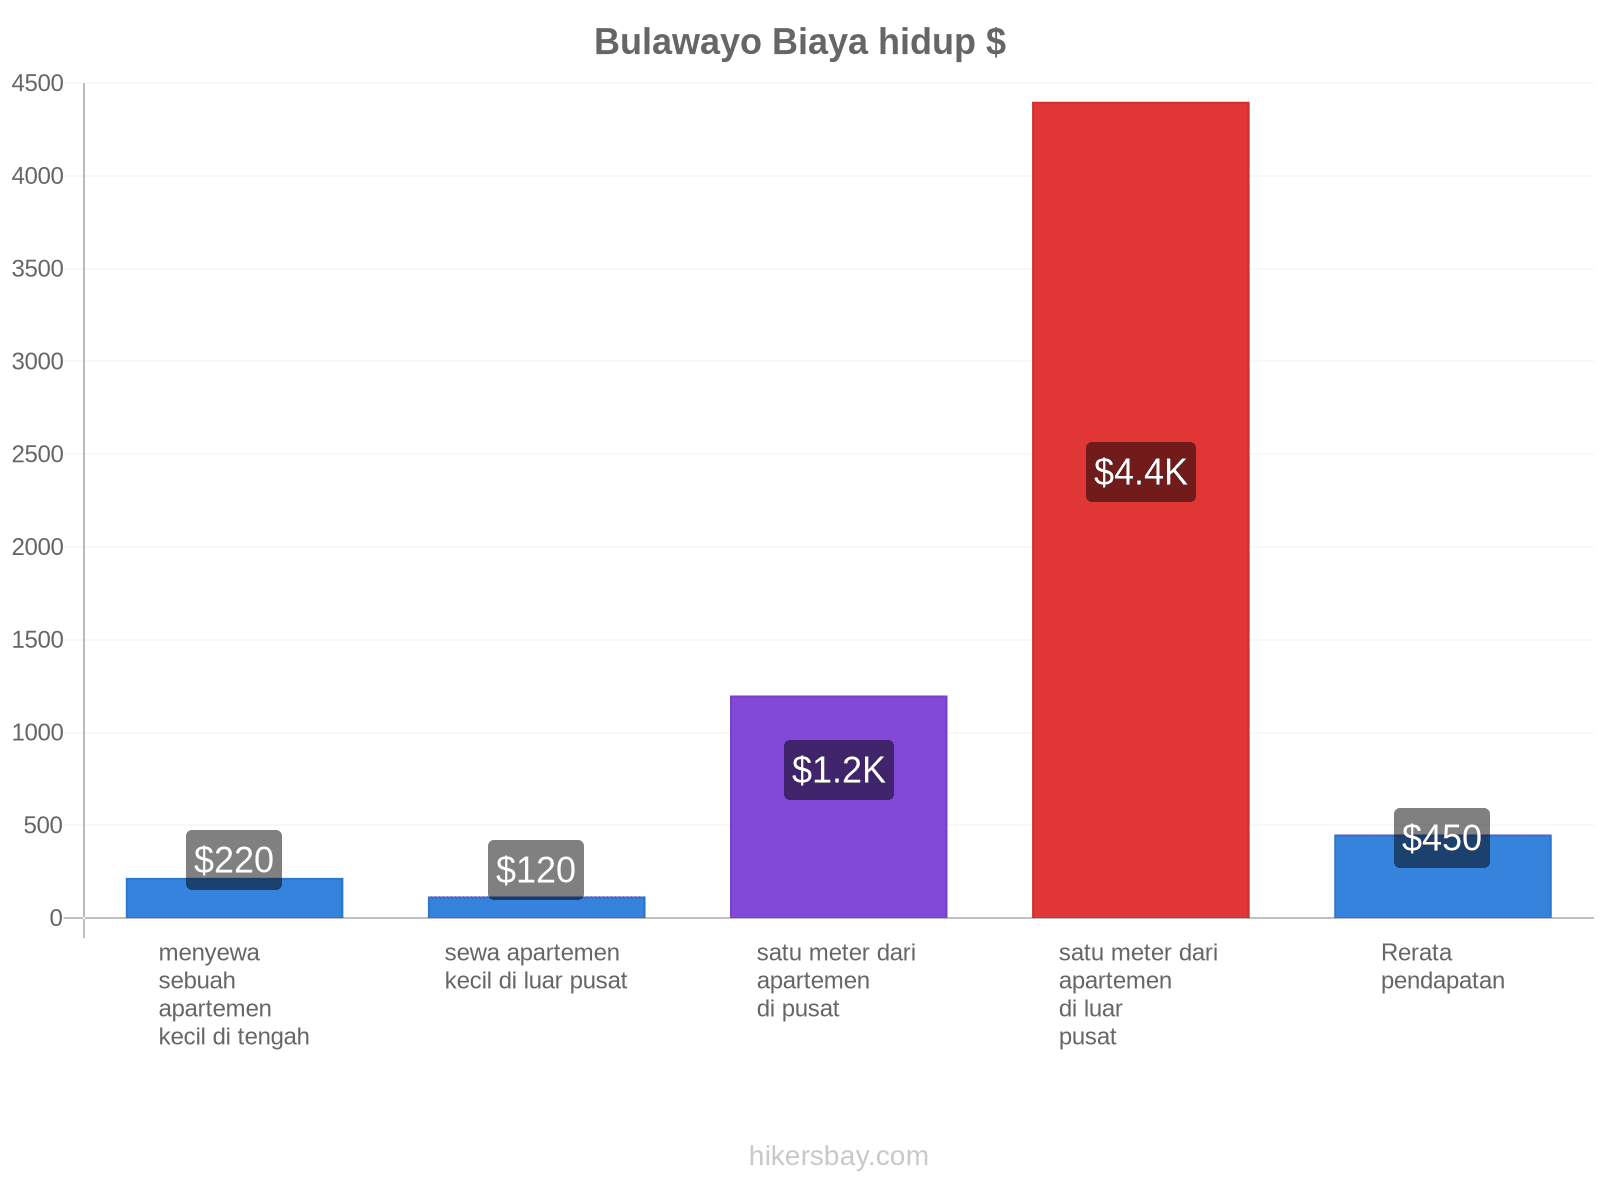 Bulawayo biaya hidup hikersbay.com